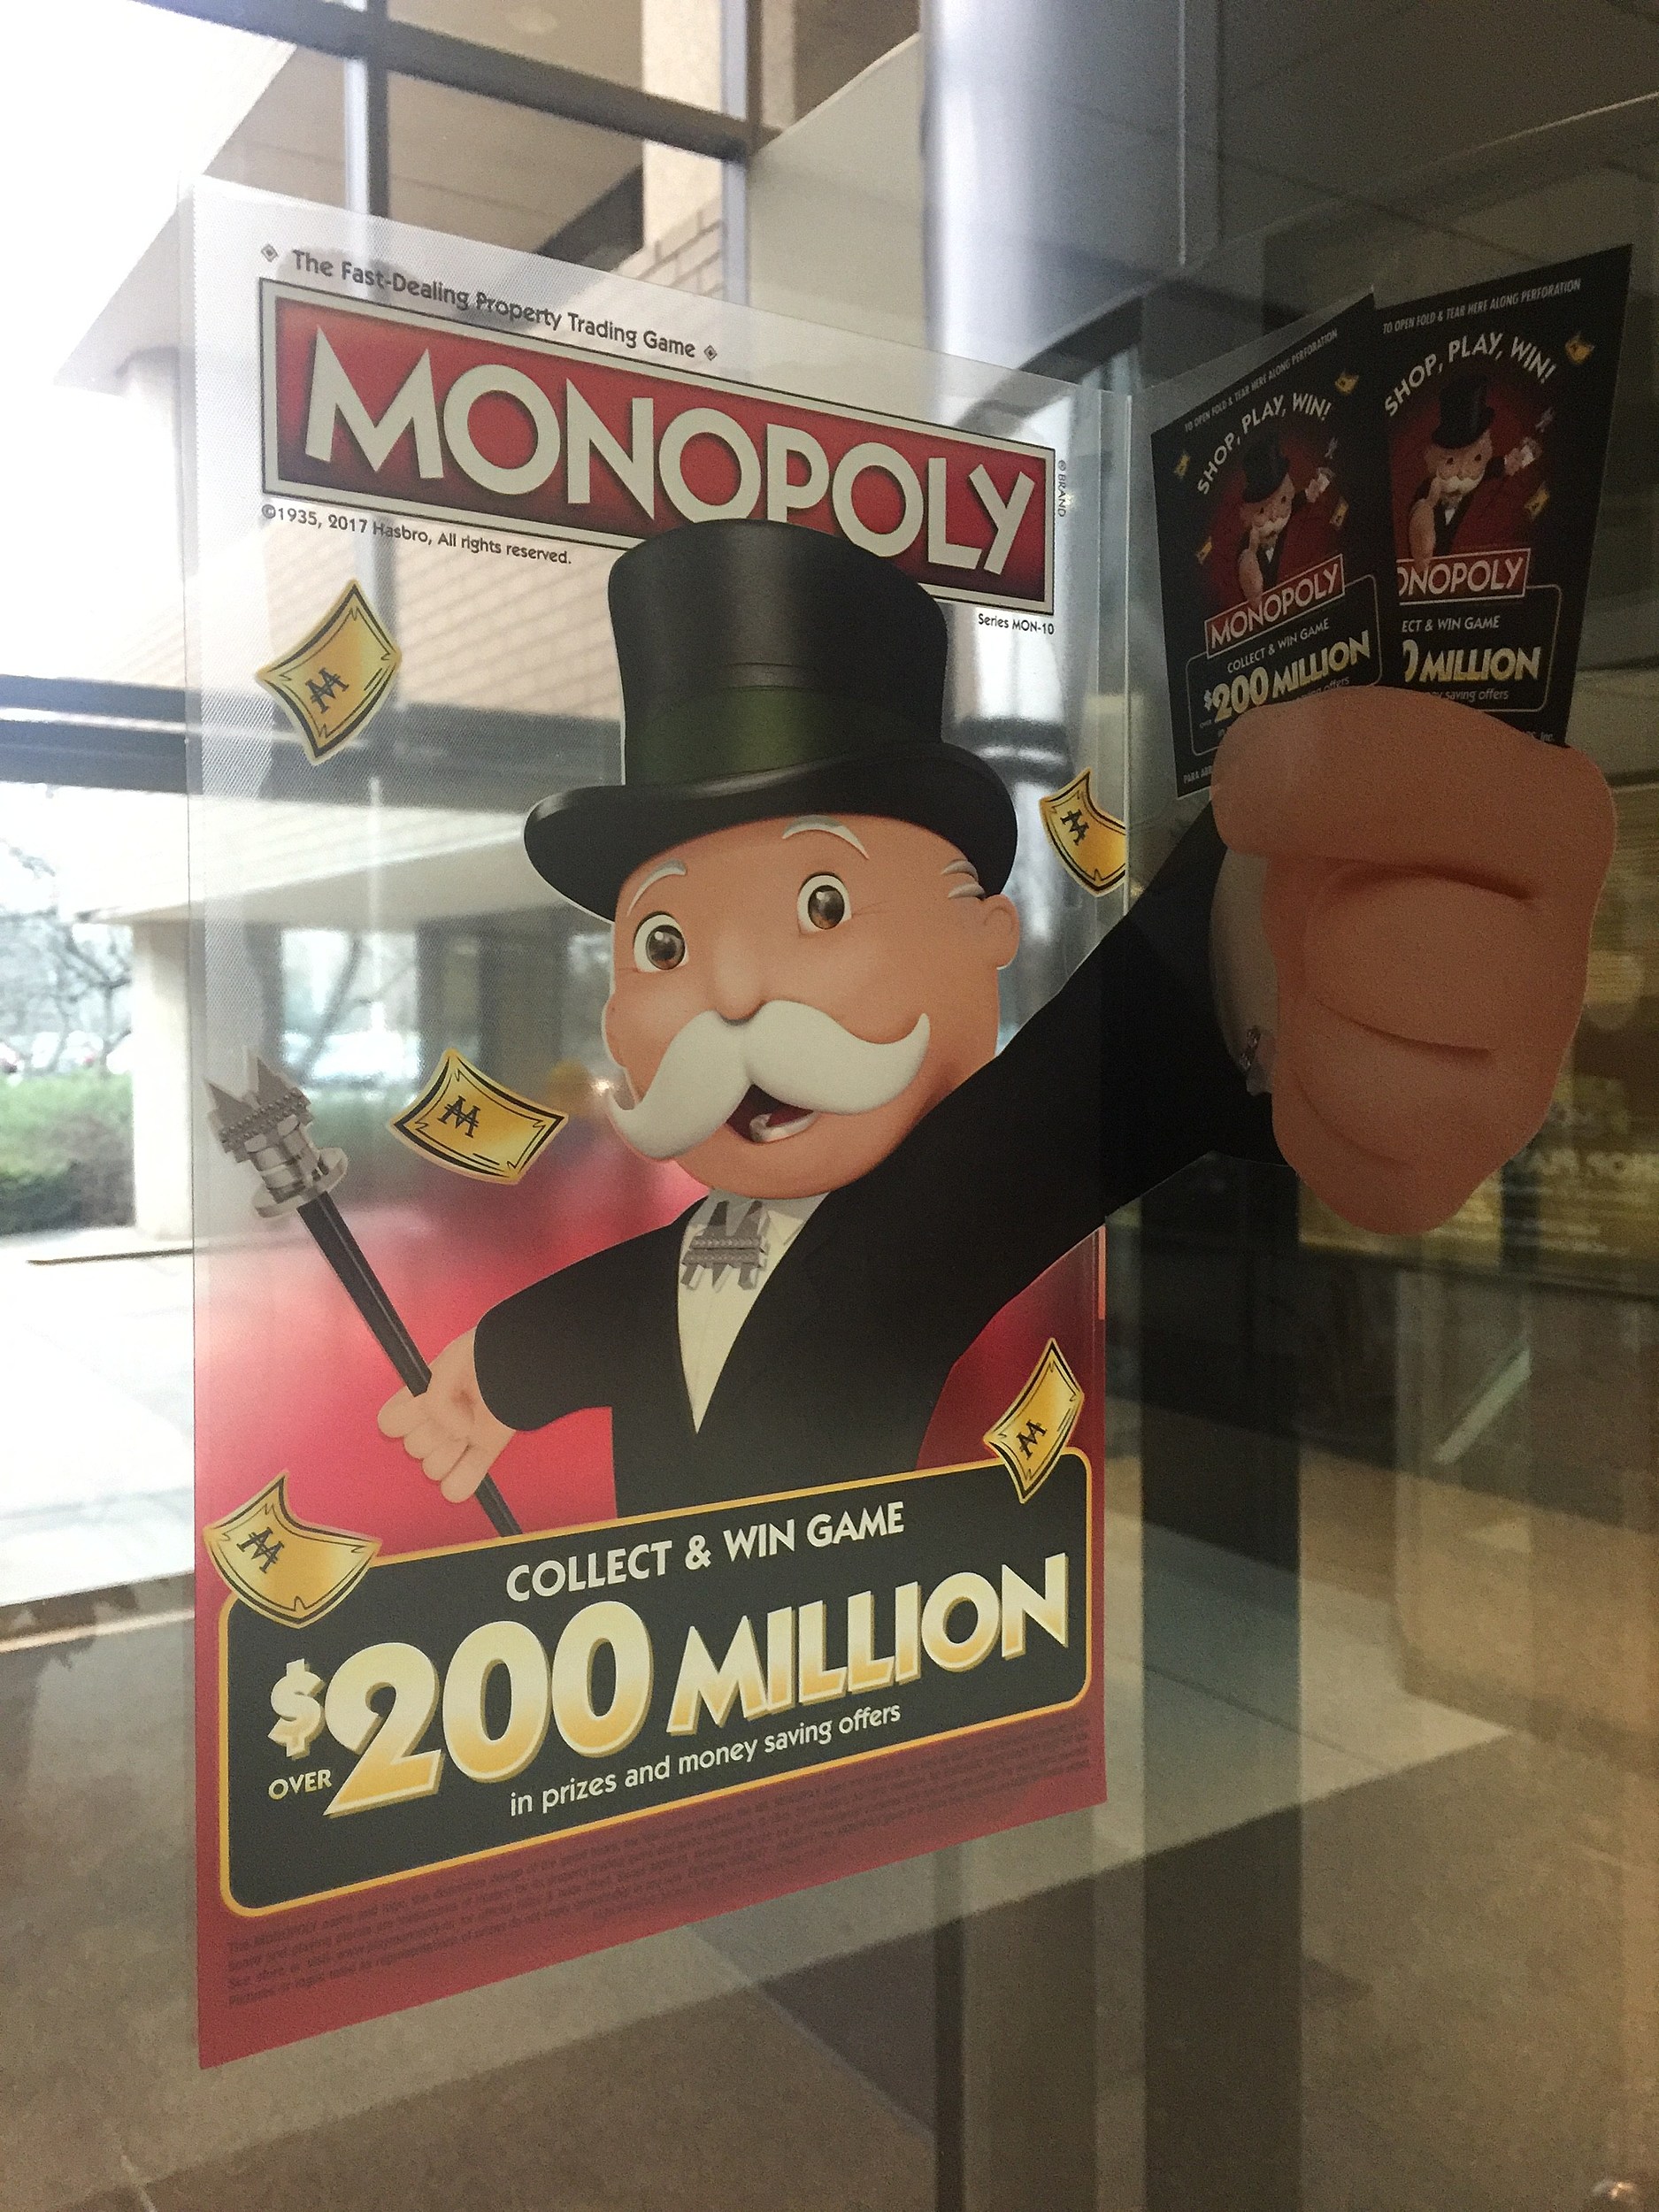 kroger buying albertsons monopoly